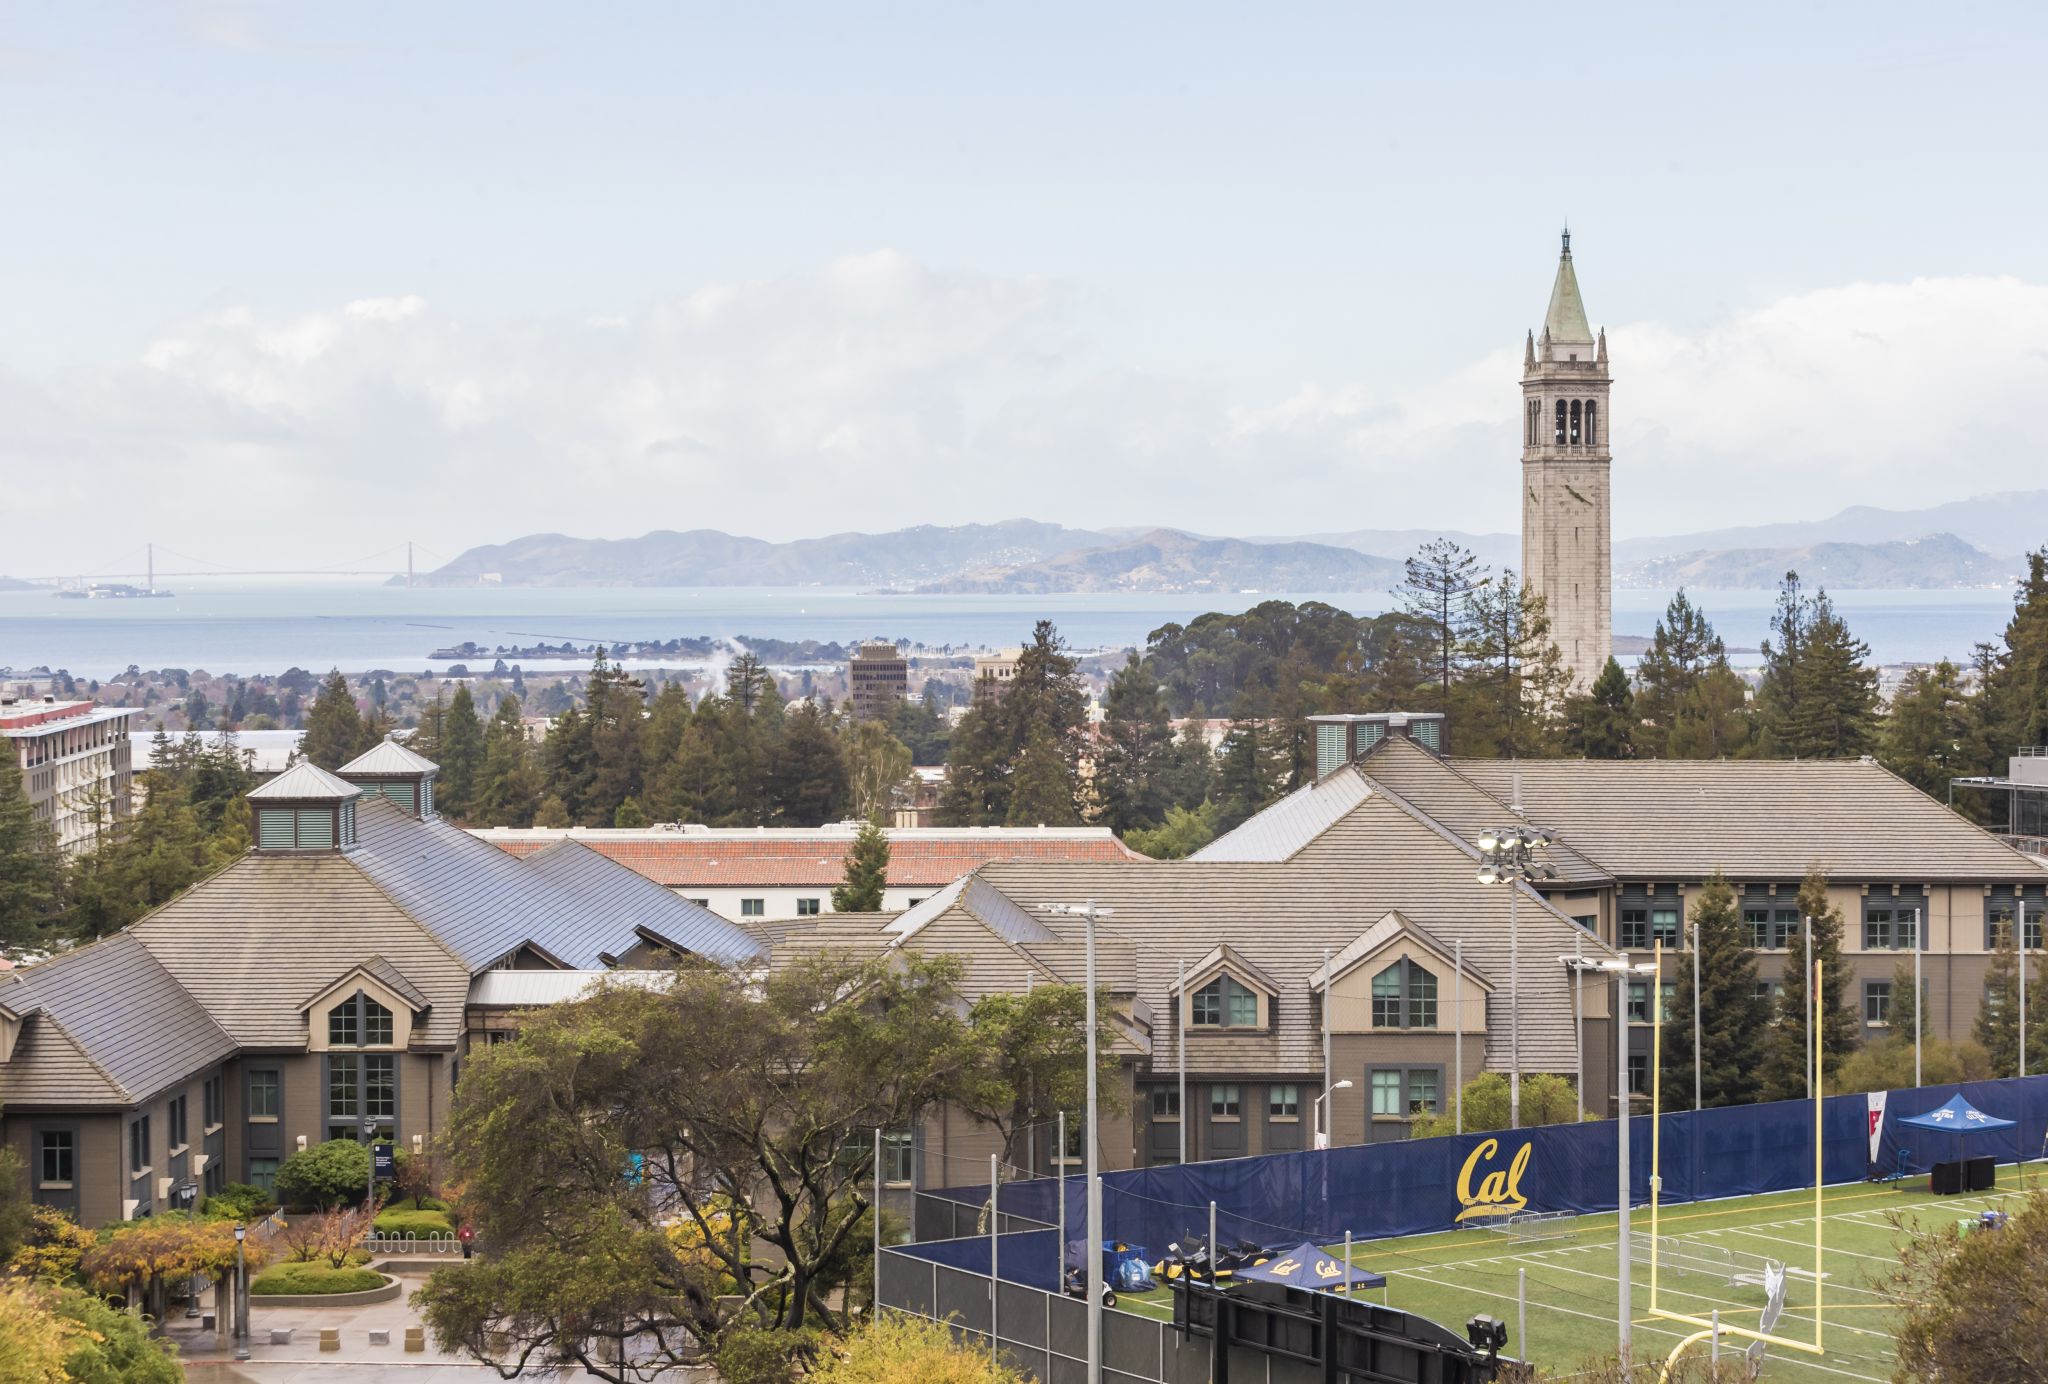 UC Berkeley returns to U.S. News' best university rankings after false